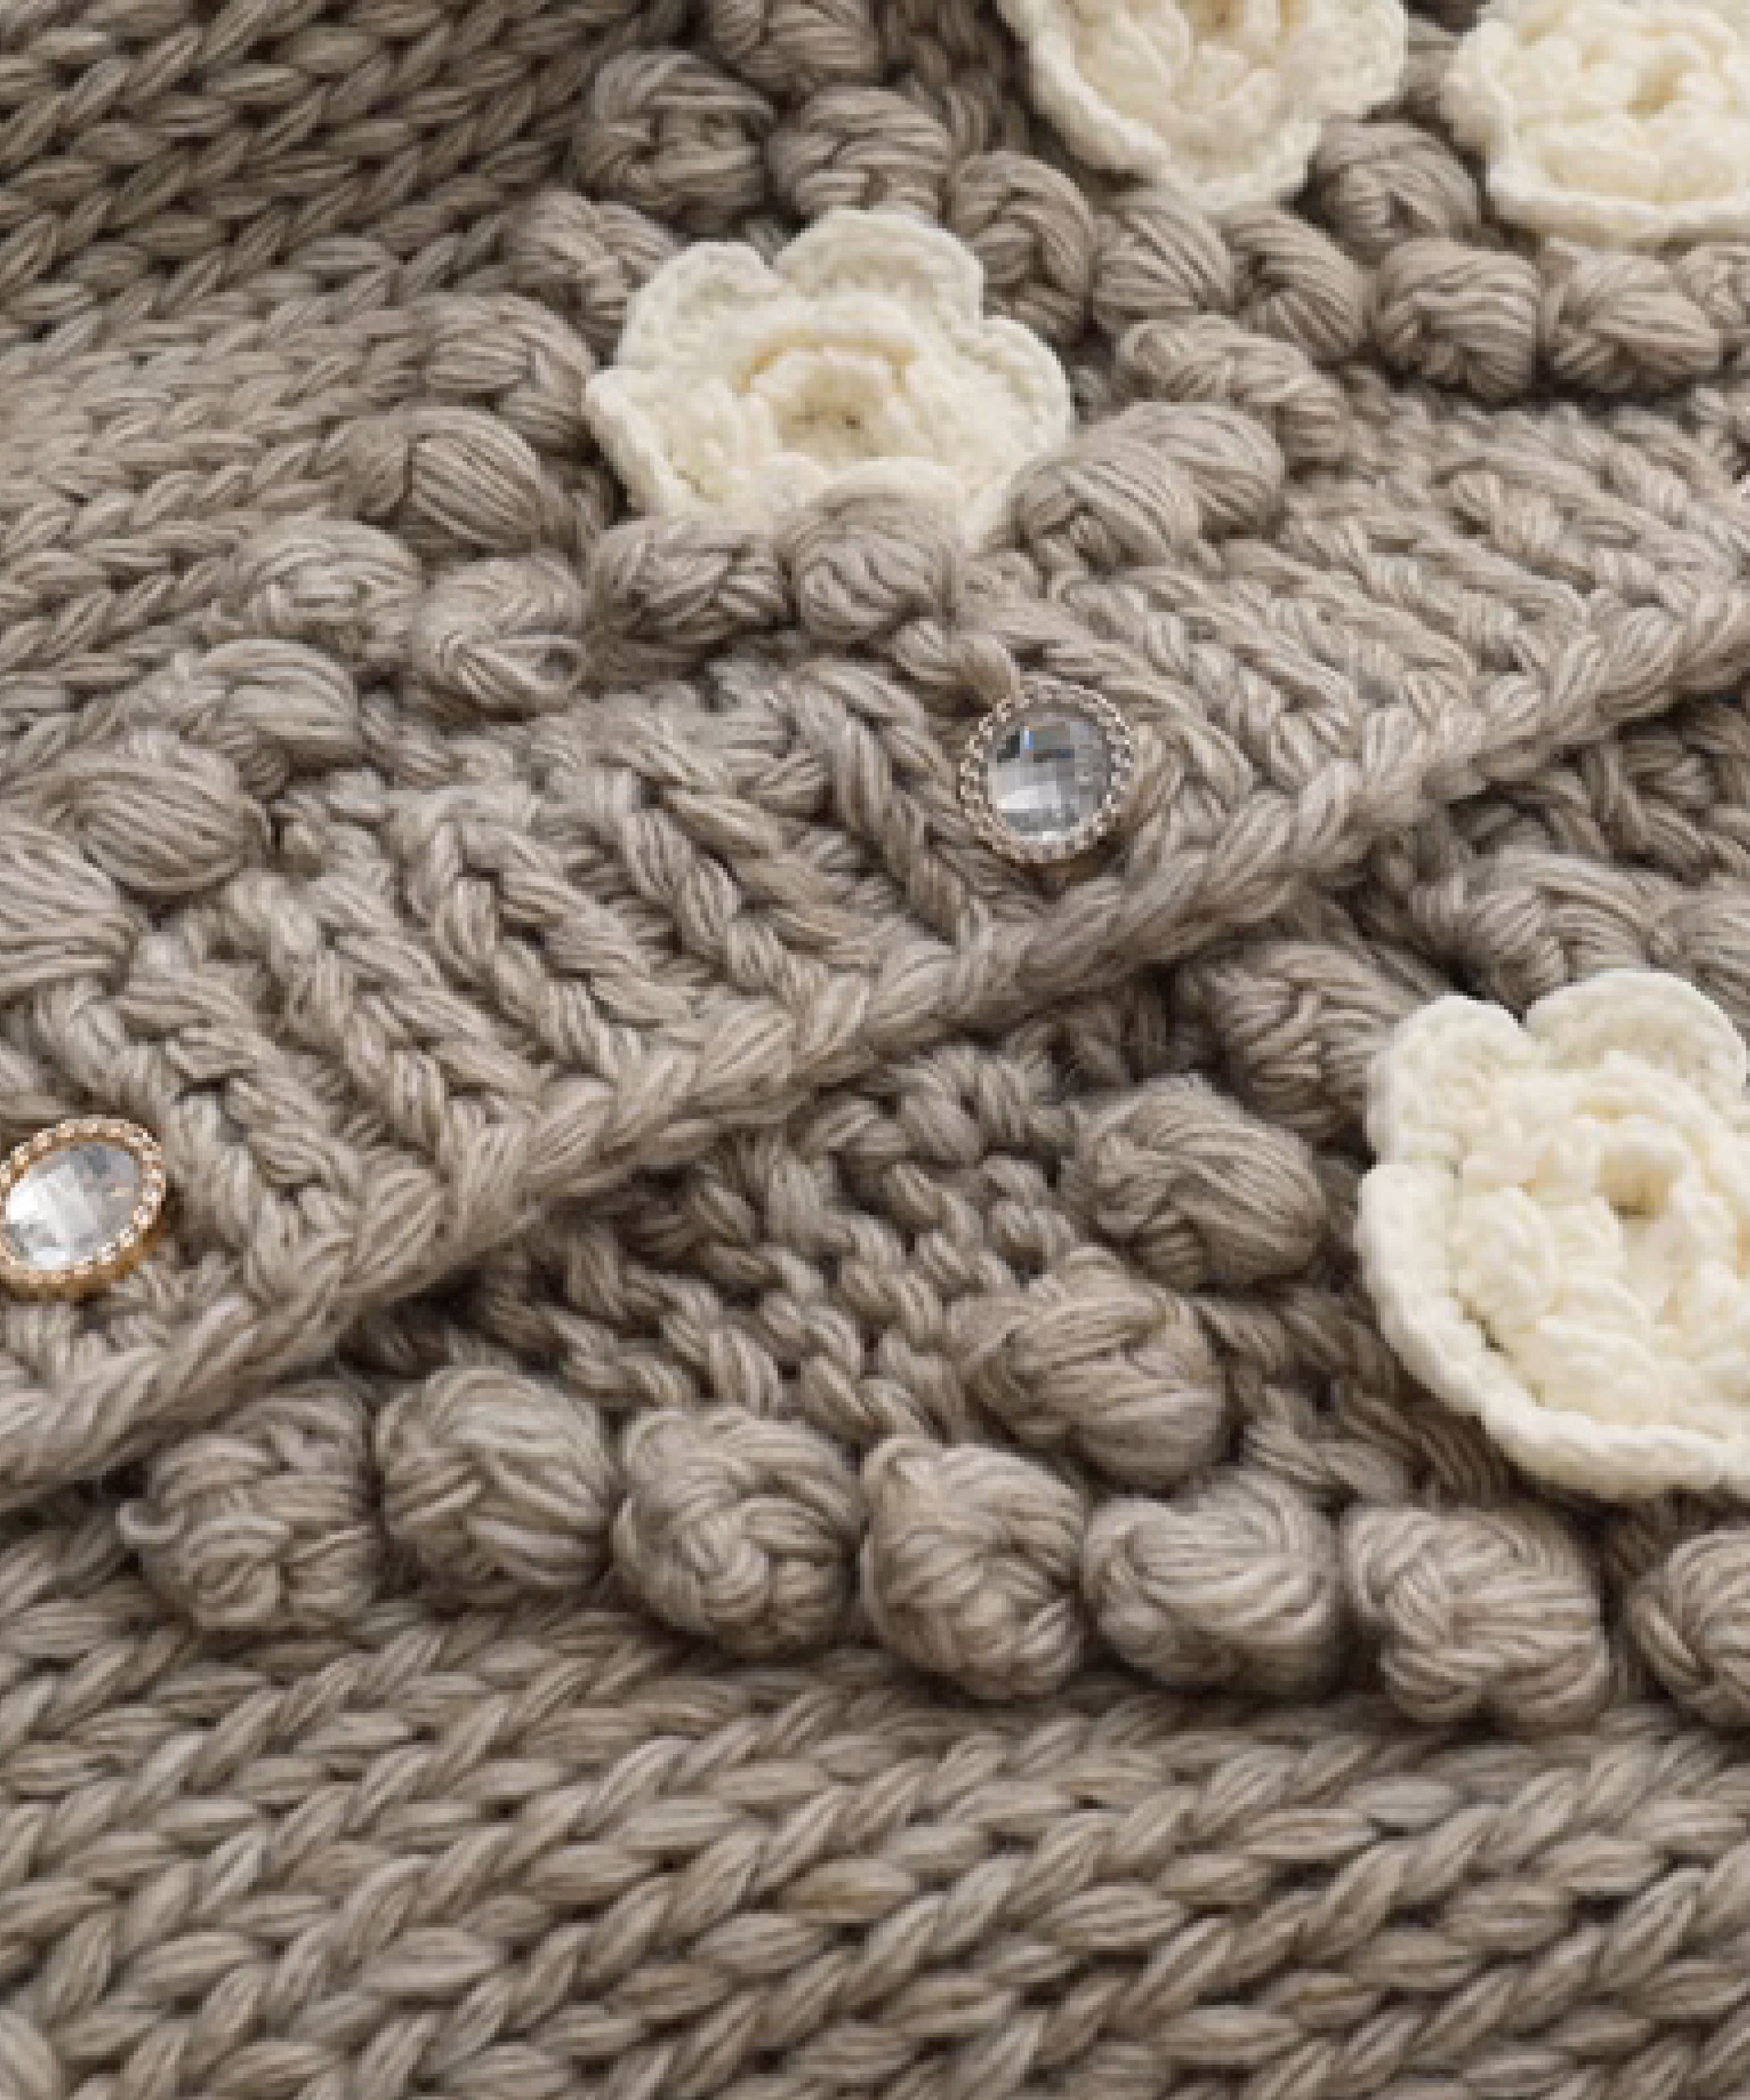 Handmade Applique Crochet Cardigan Handmade Applique Crochet Cardigan 